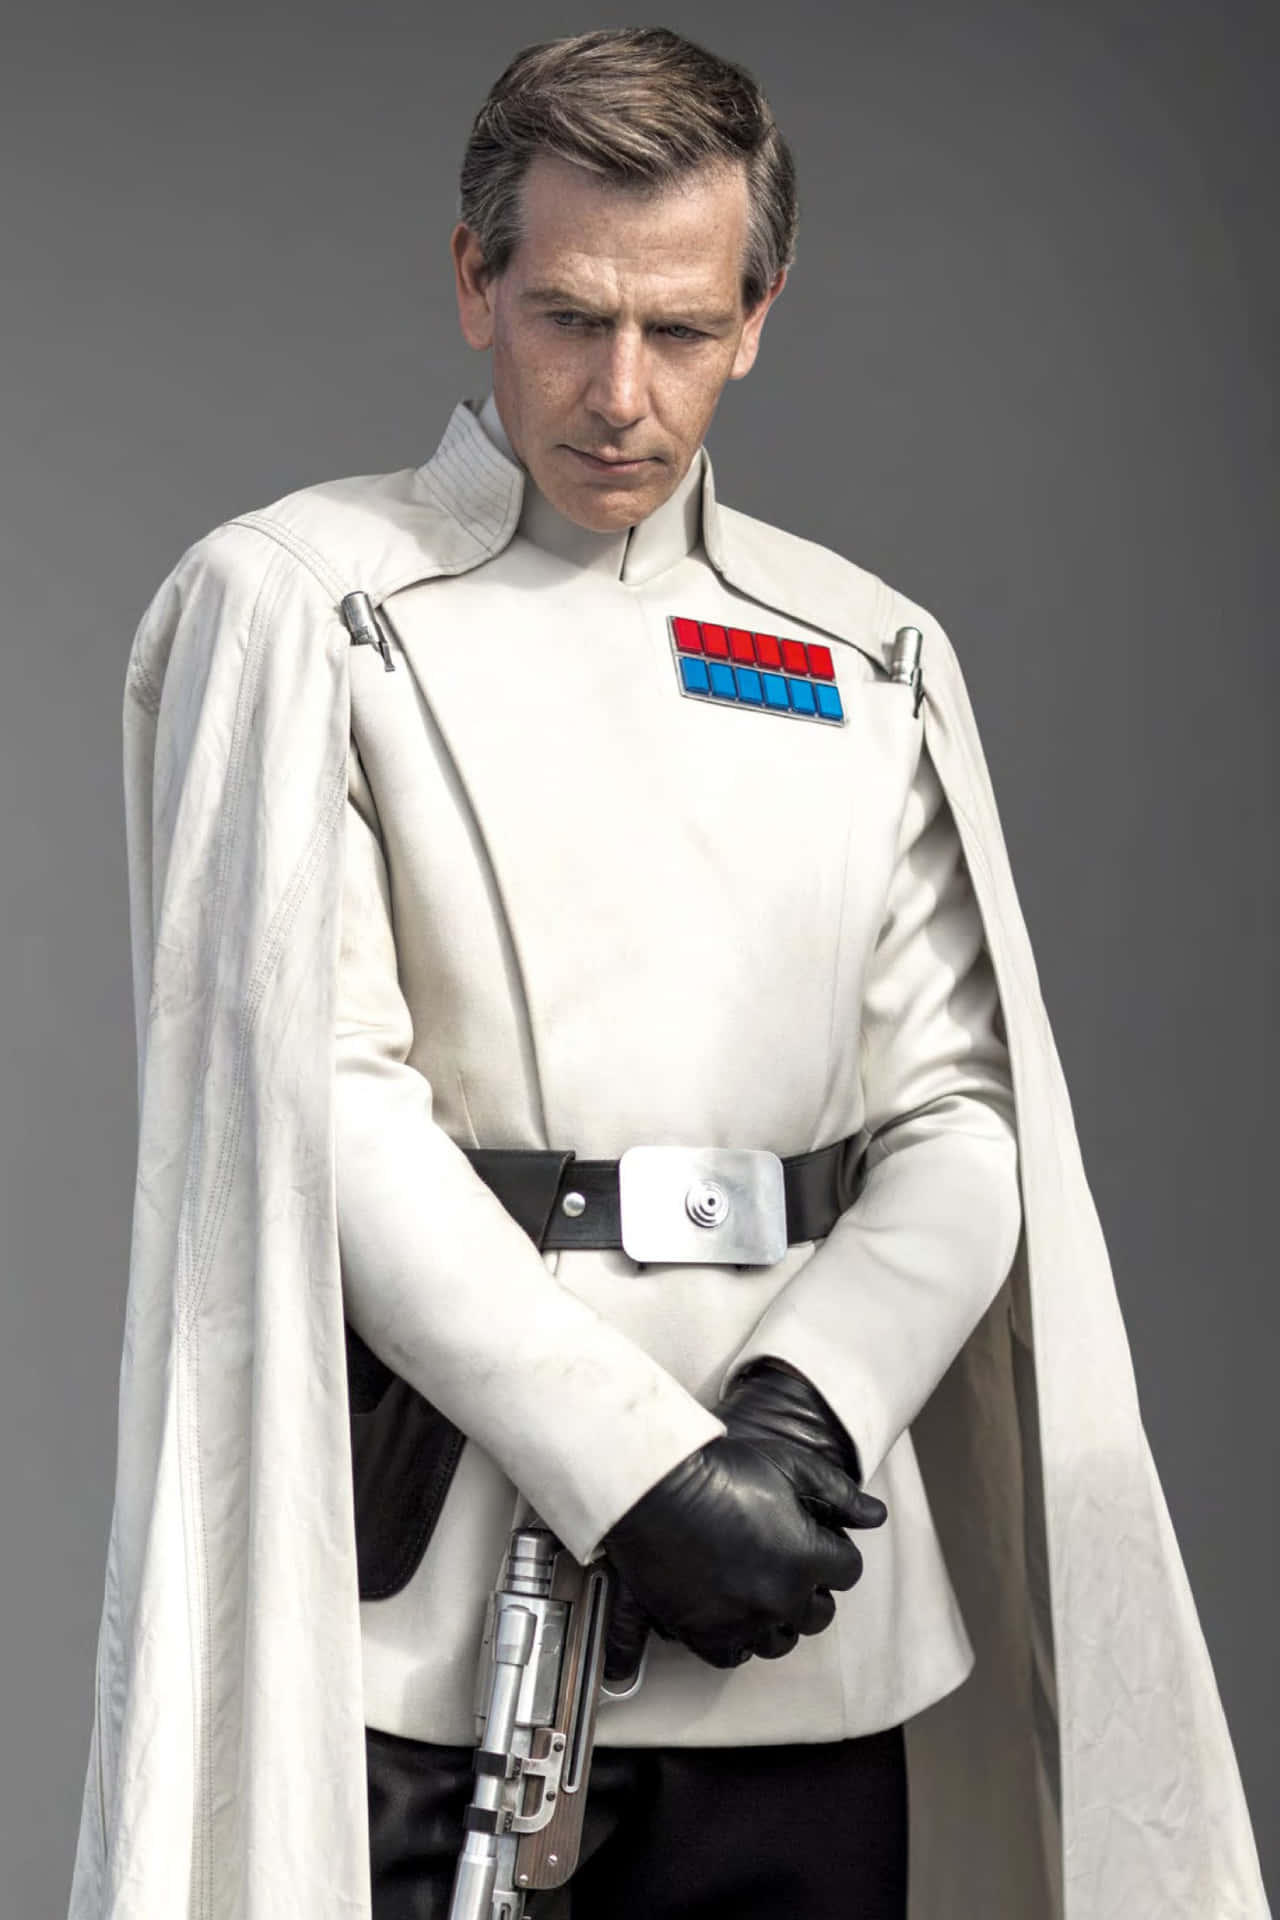 Imperial Officerin White Uniform Wallpaper